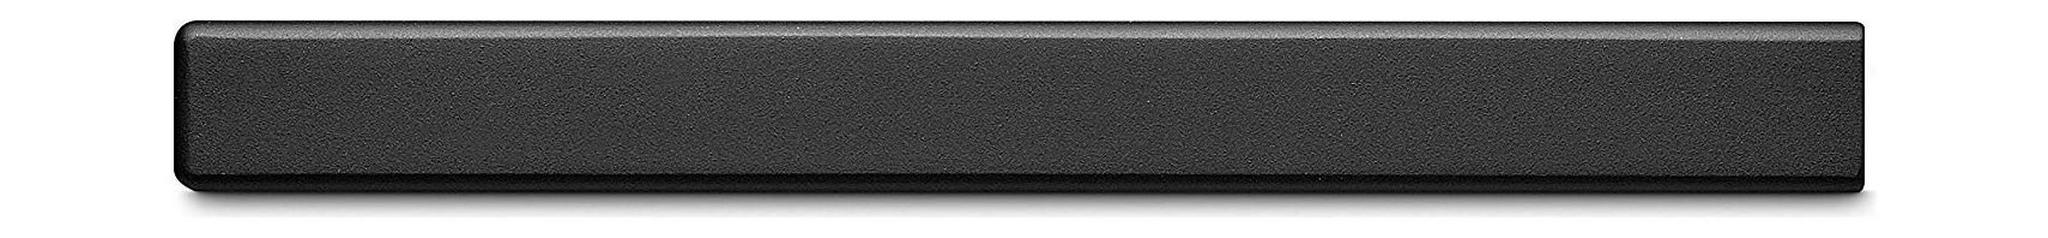 Seagate Backup Plus Ultra Touch Portable Drive 1TB - Black